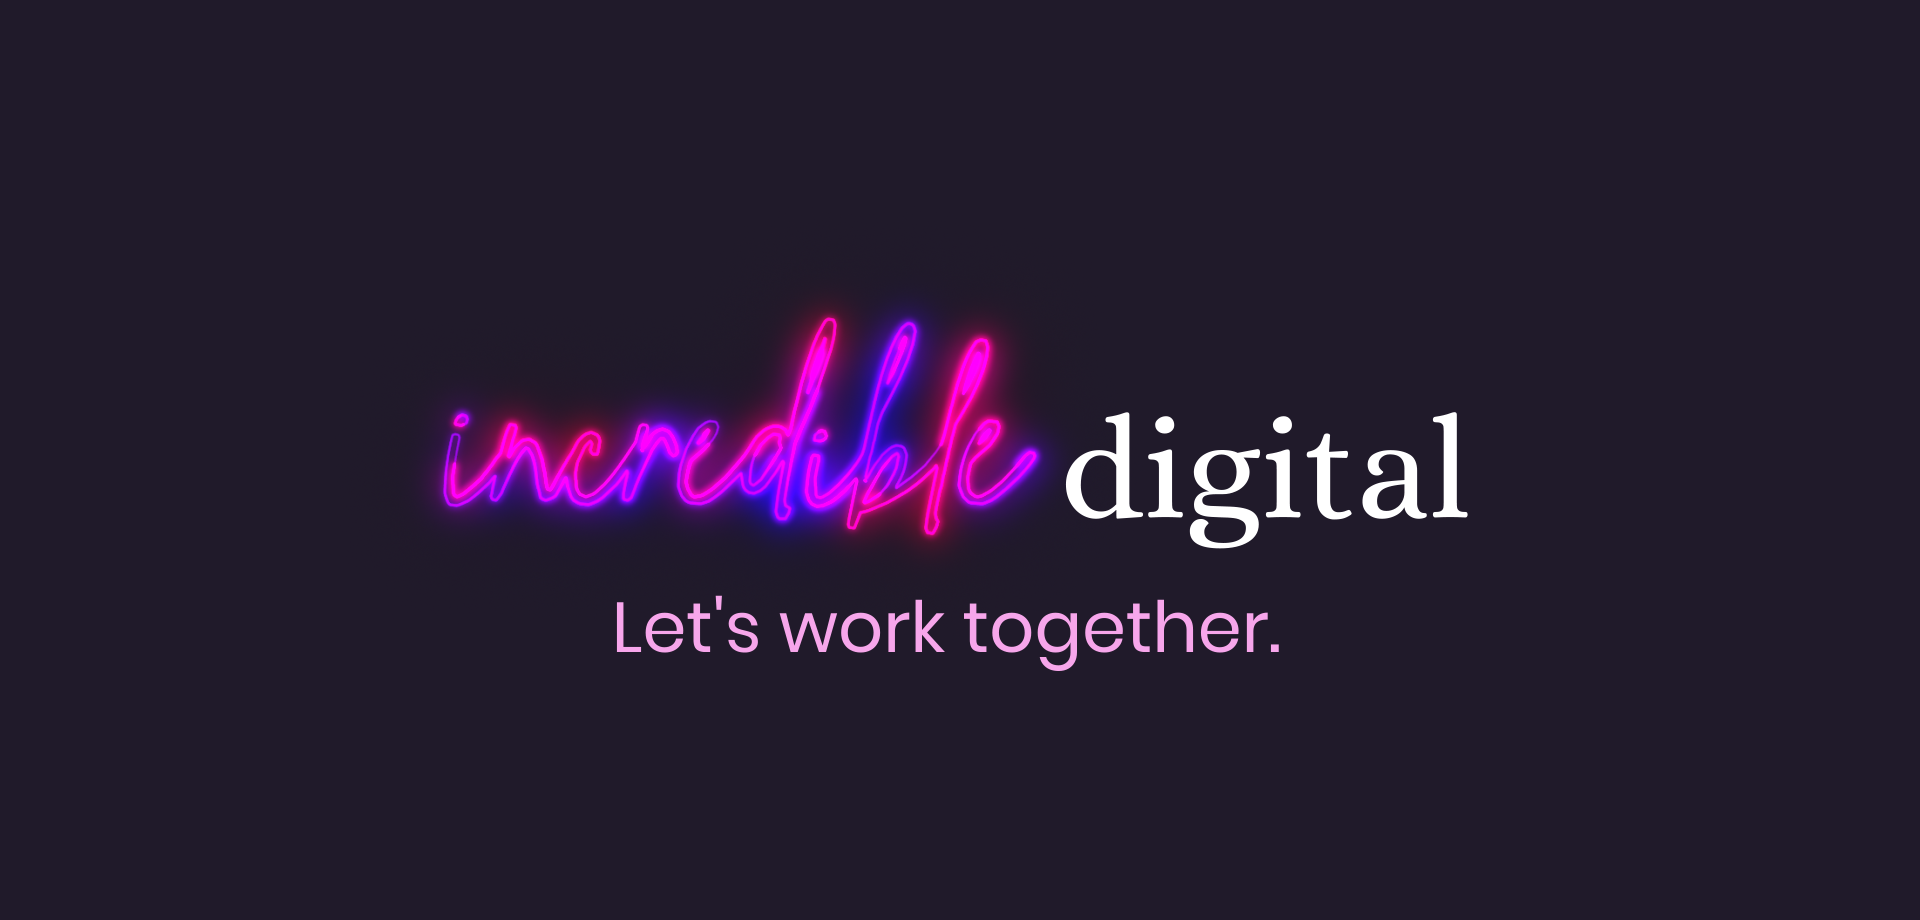 Your incredible digital partner